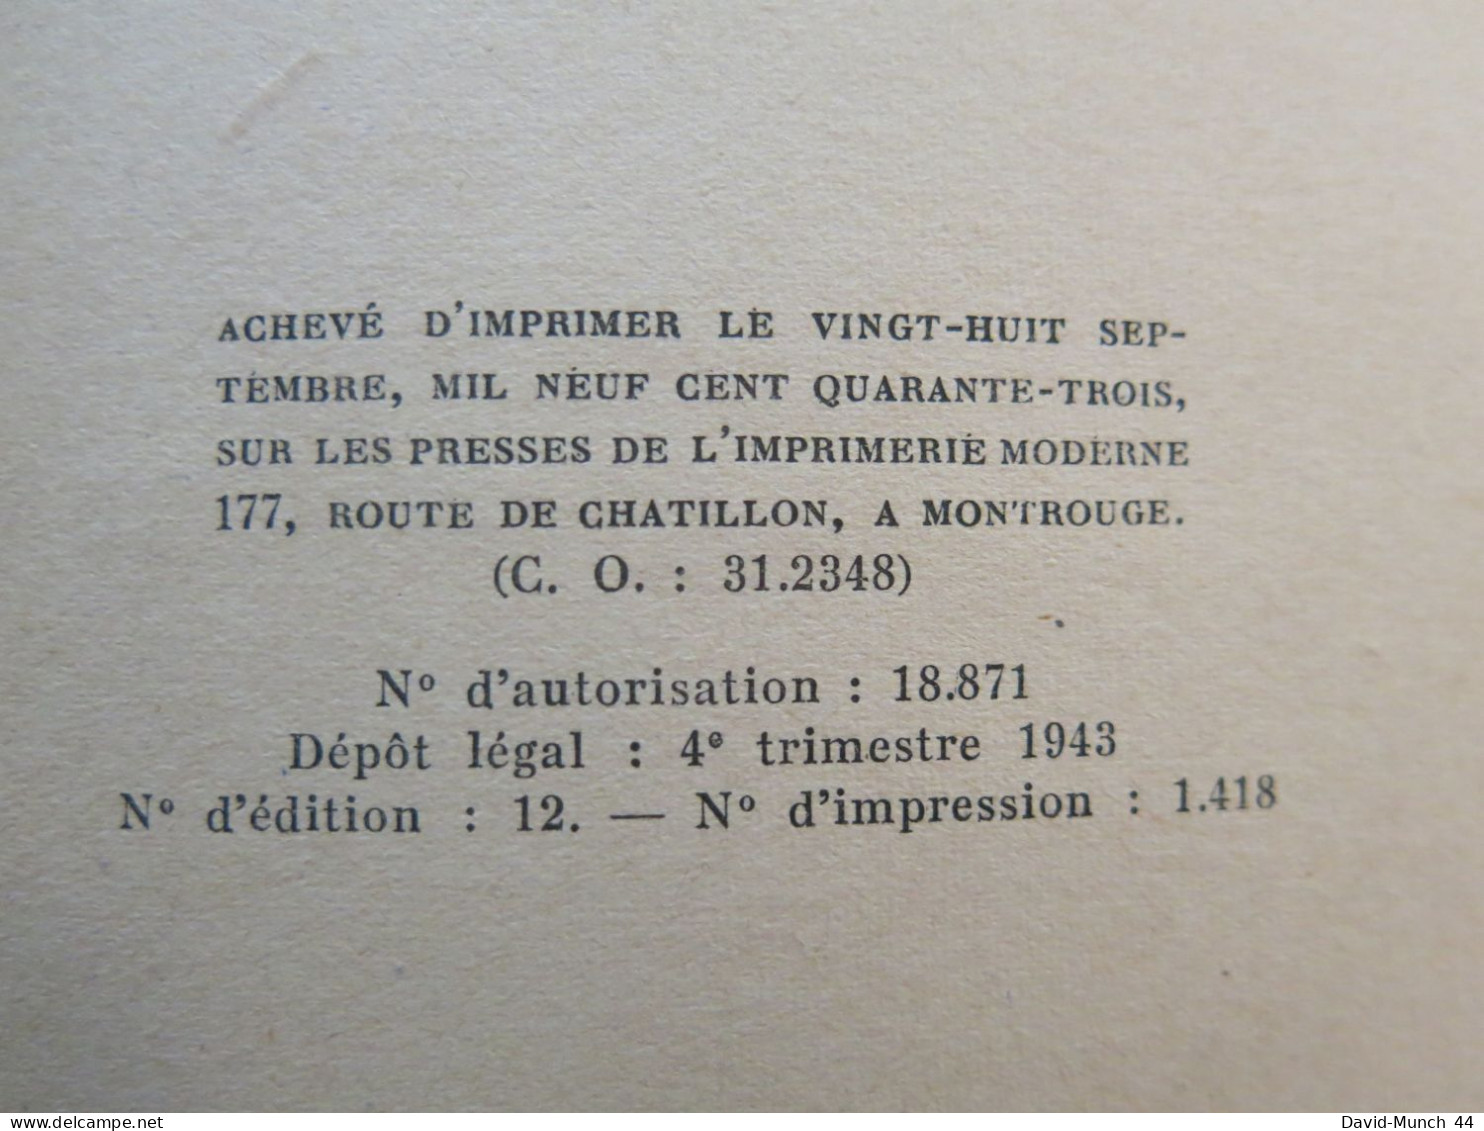 Gerbe Baude de Georges Magnane. Gallimard, Nrf. 1943